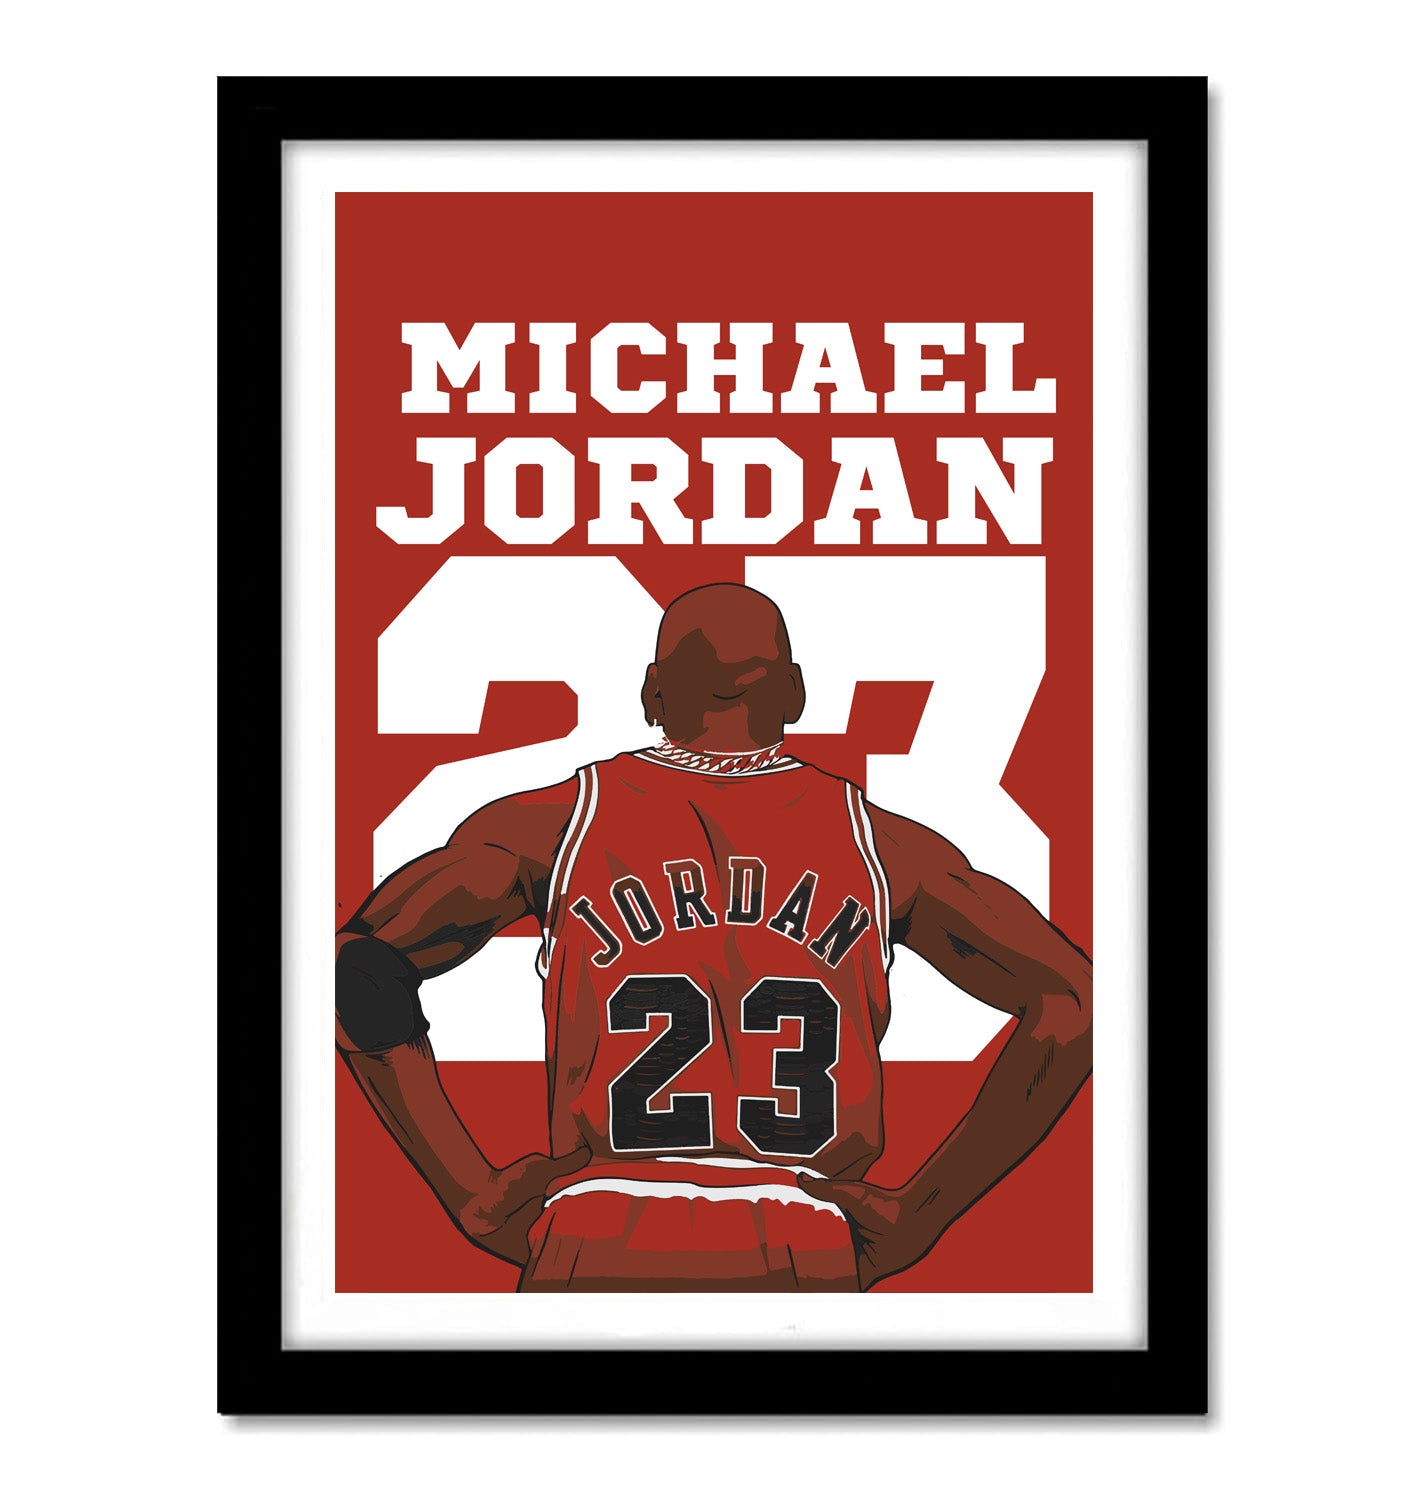 Michael Jordan Pop Art work